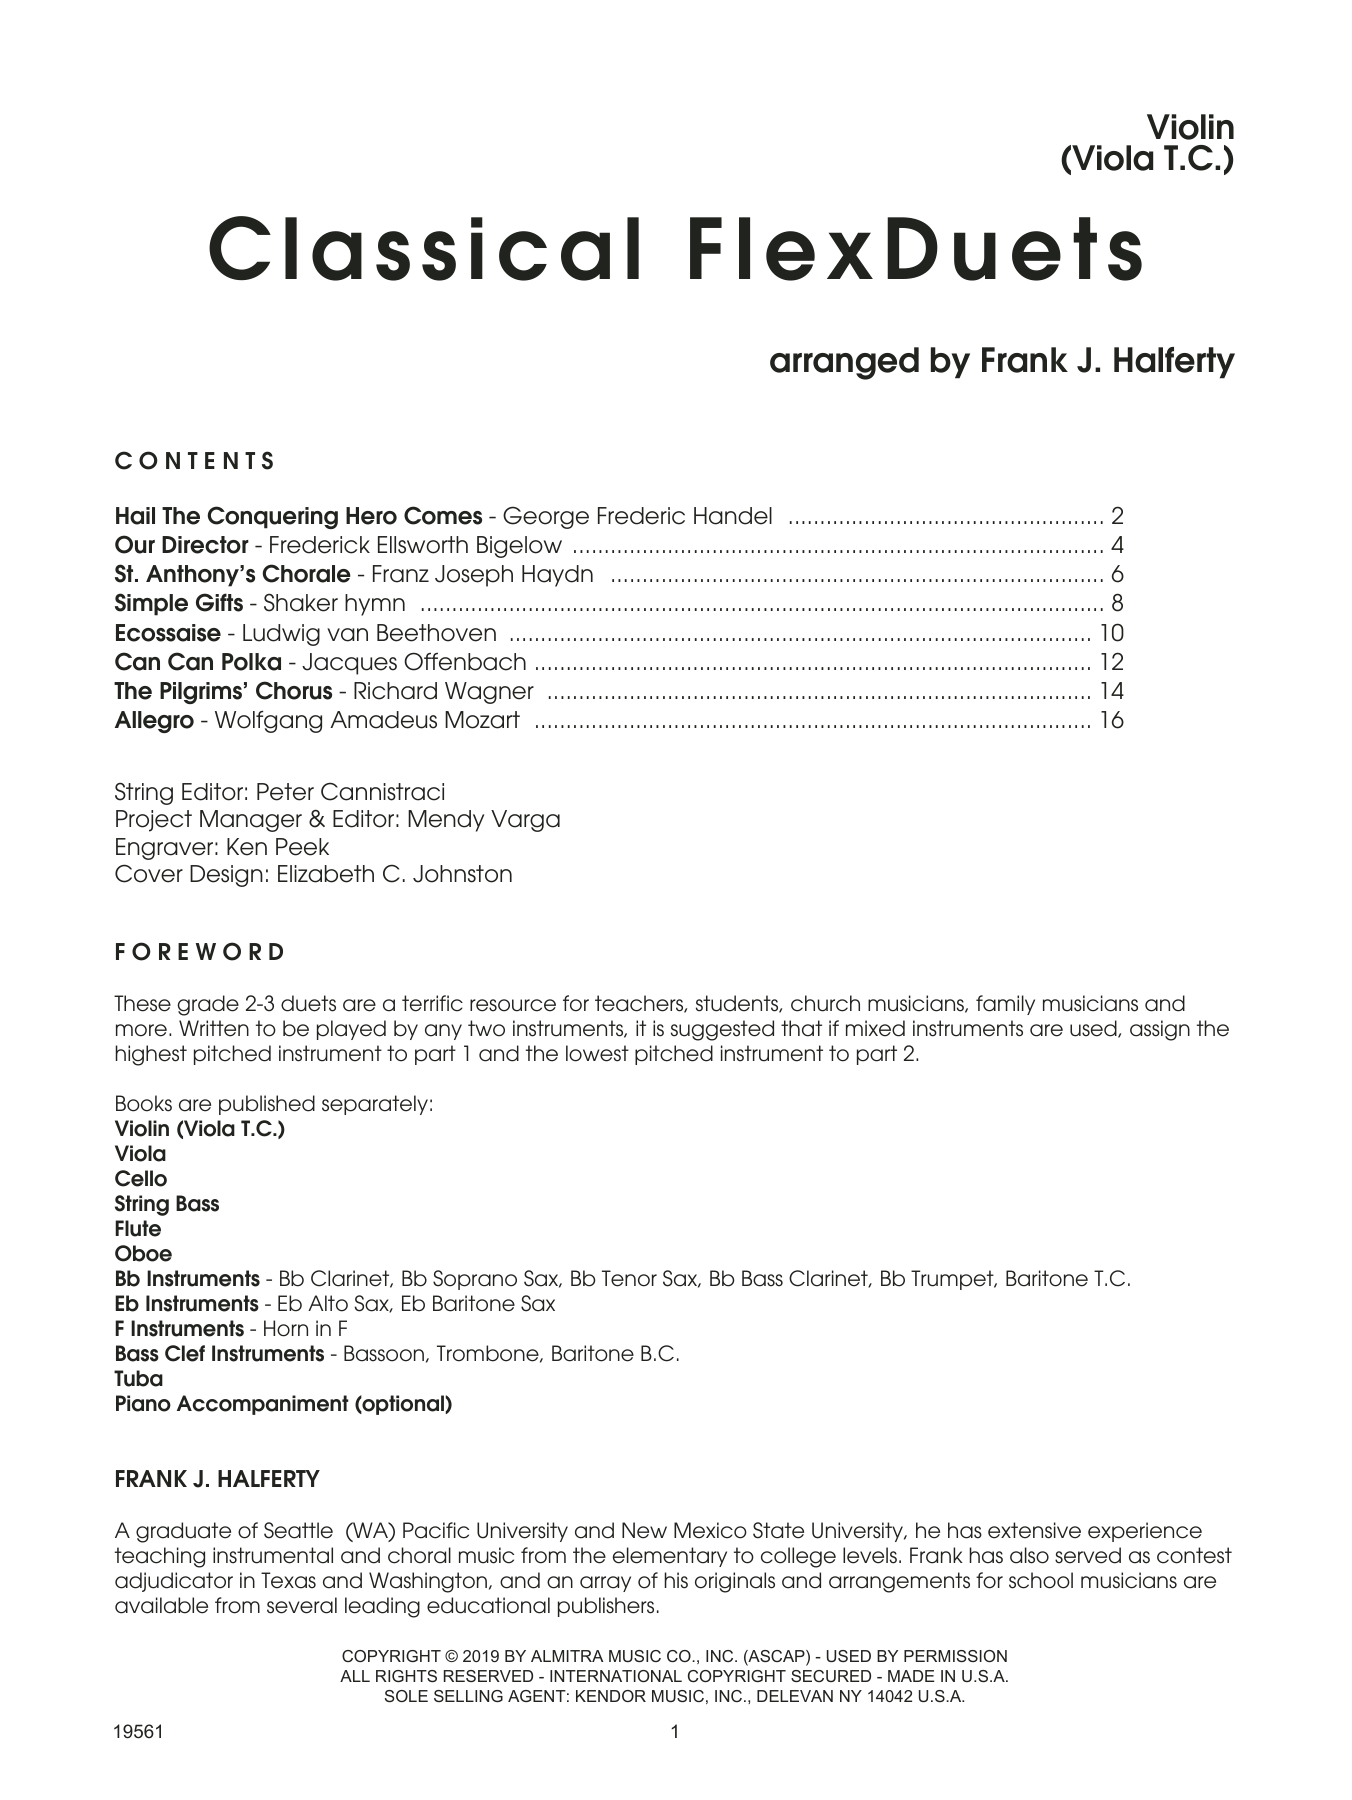 Download Frank J. Halferty Classical Flexduets - Violin Sheet Music